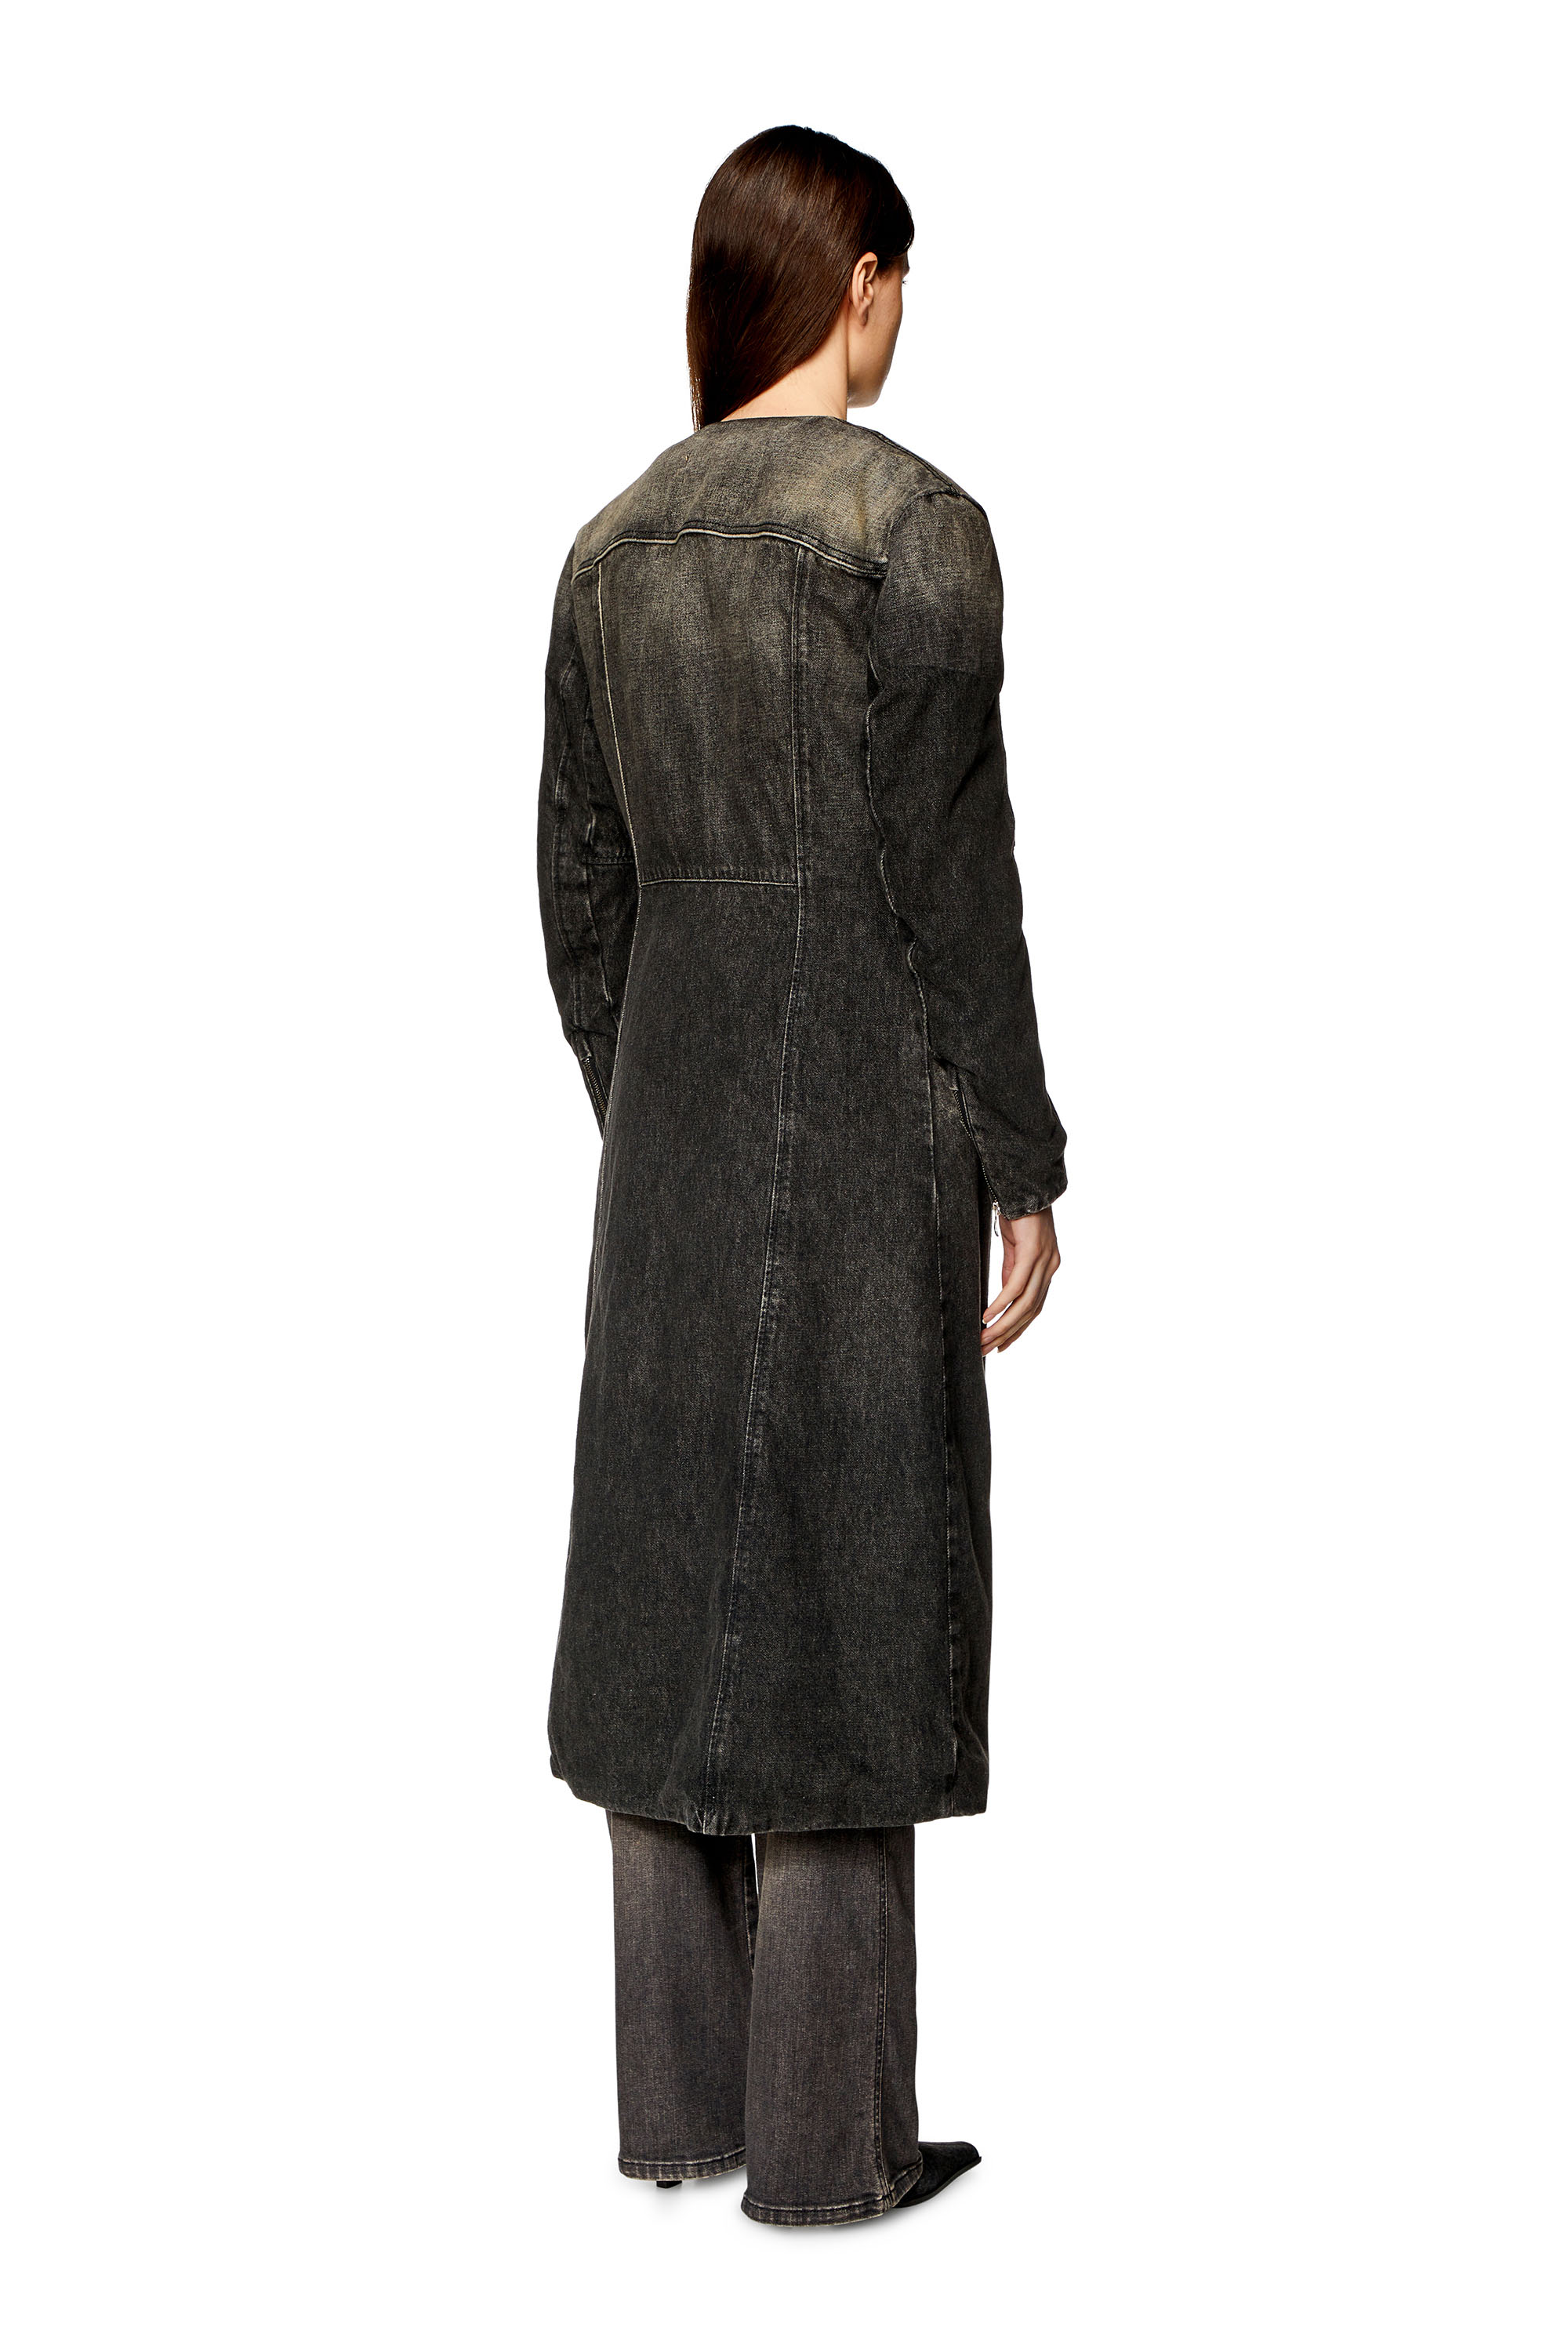 Diesel - DE-SY-S, Woman Denim coat in cotton and hemp in Black - Image 3